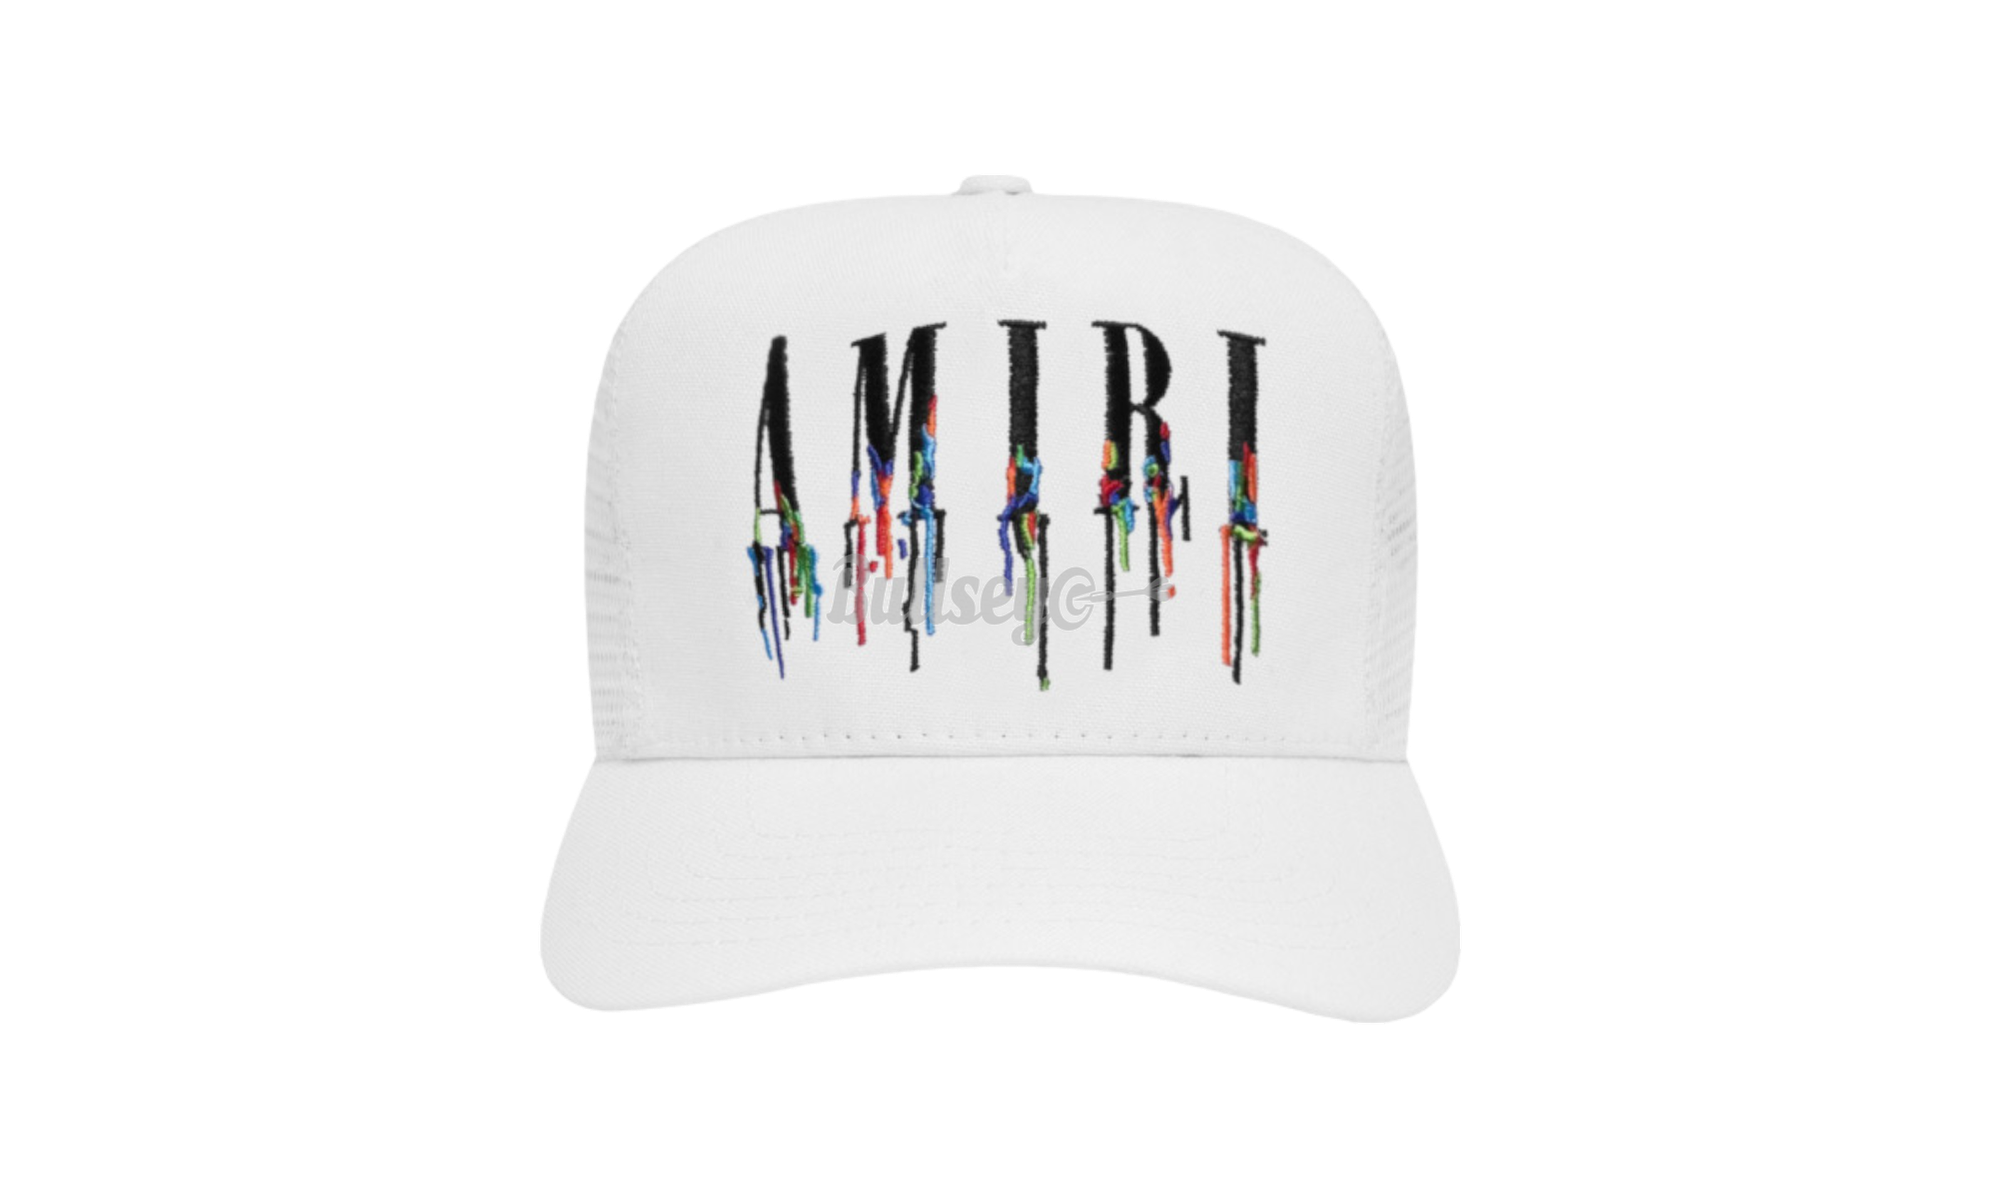 Amiri Black Embroidered Paint Drip Core Logo Hoodie